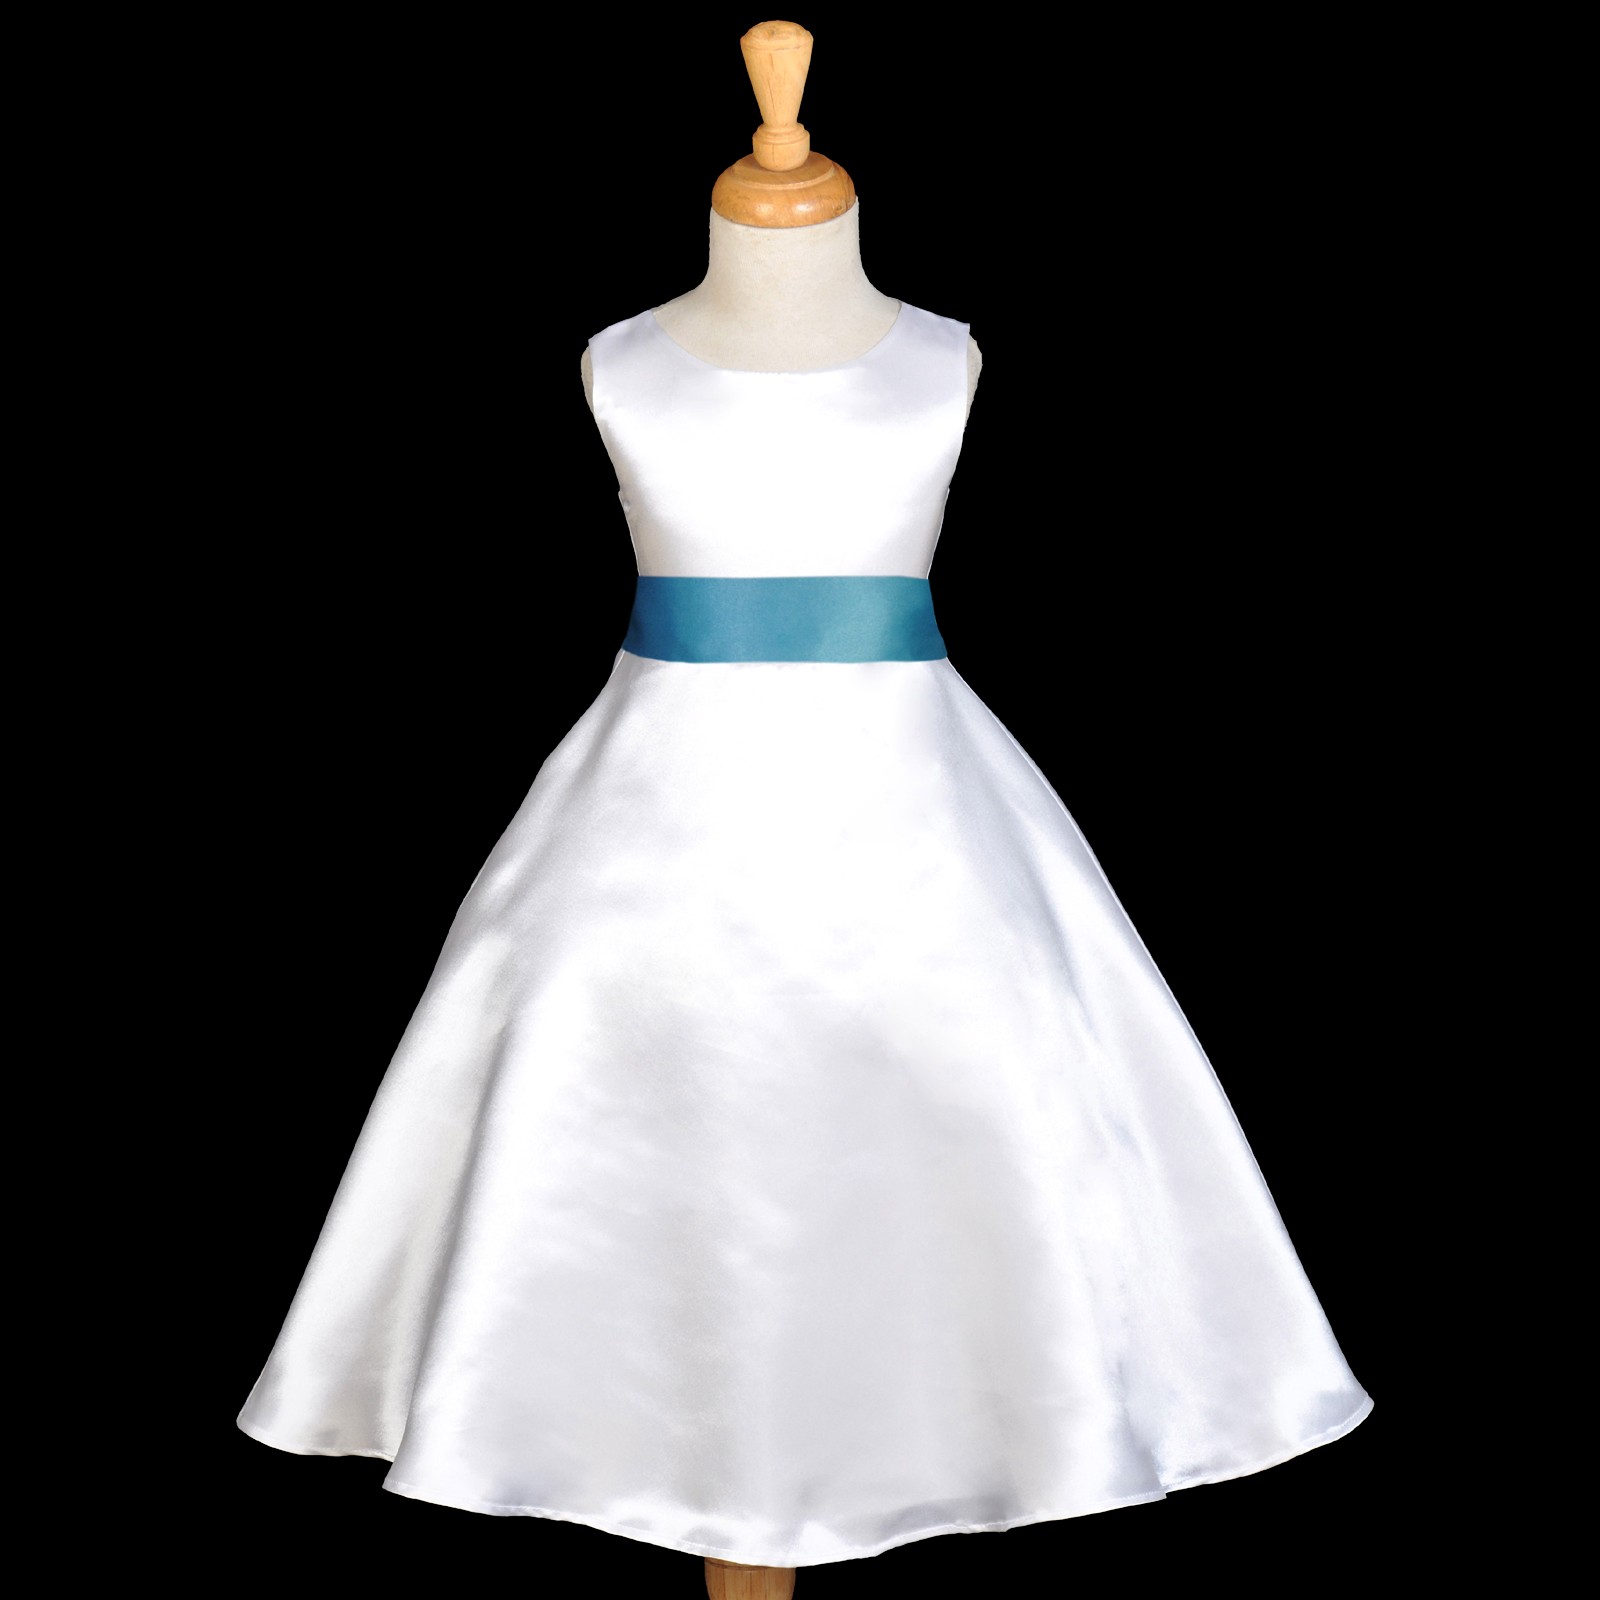 White/Turquoise A-Line Satin Flower Girl Dress Wedding Bridal 821S